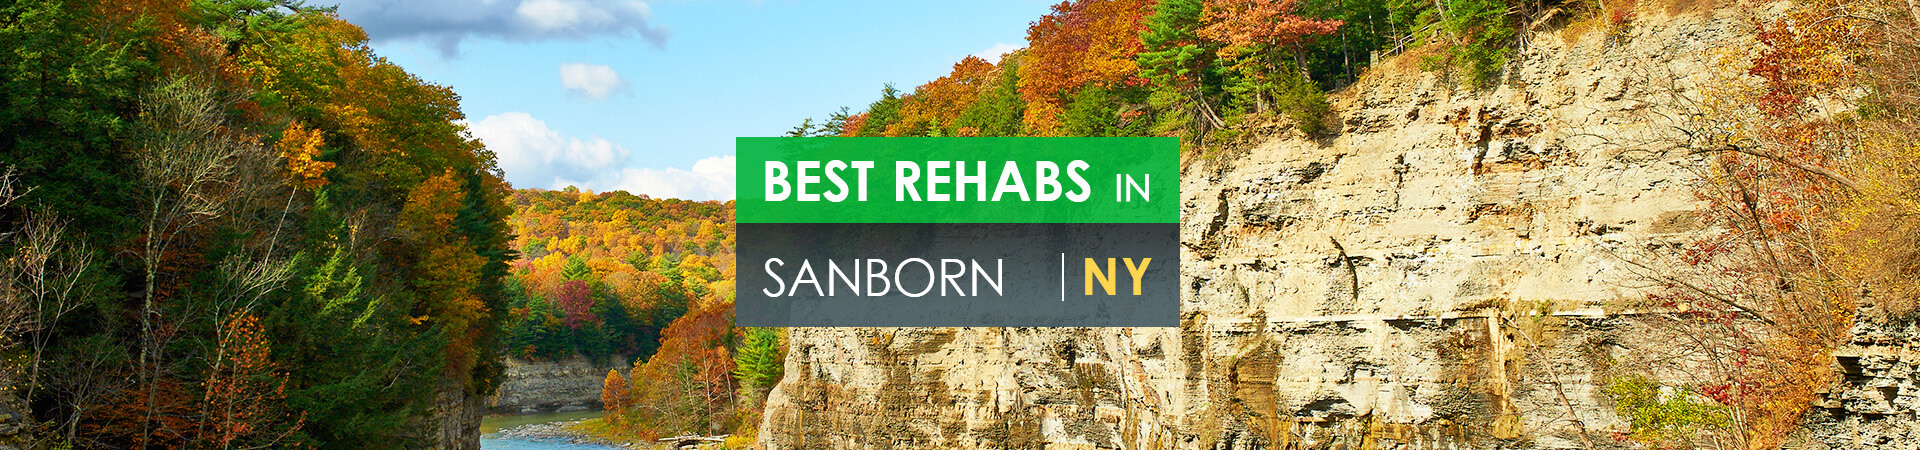 Best rehabs in Sanborn, NY